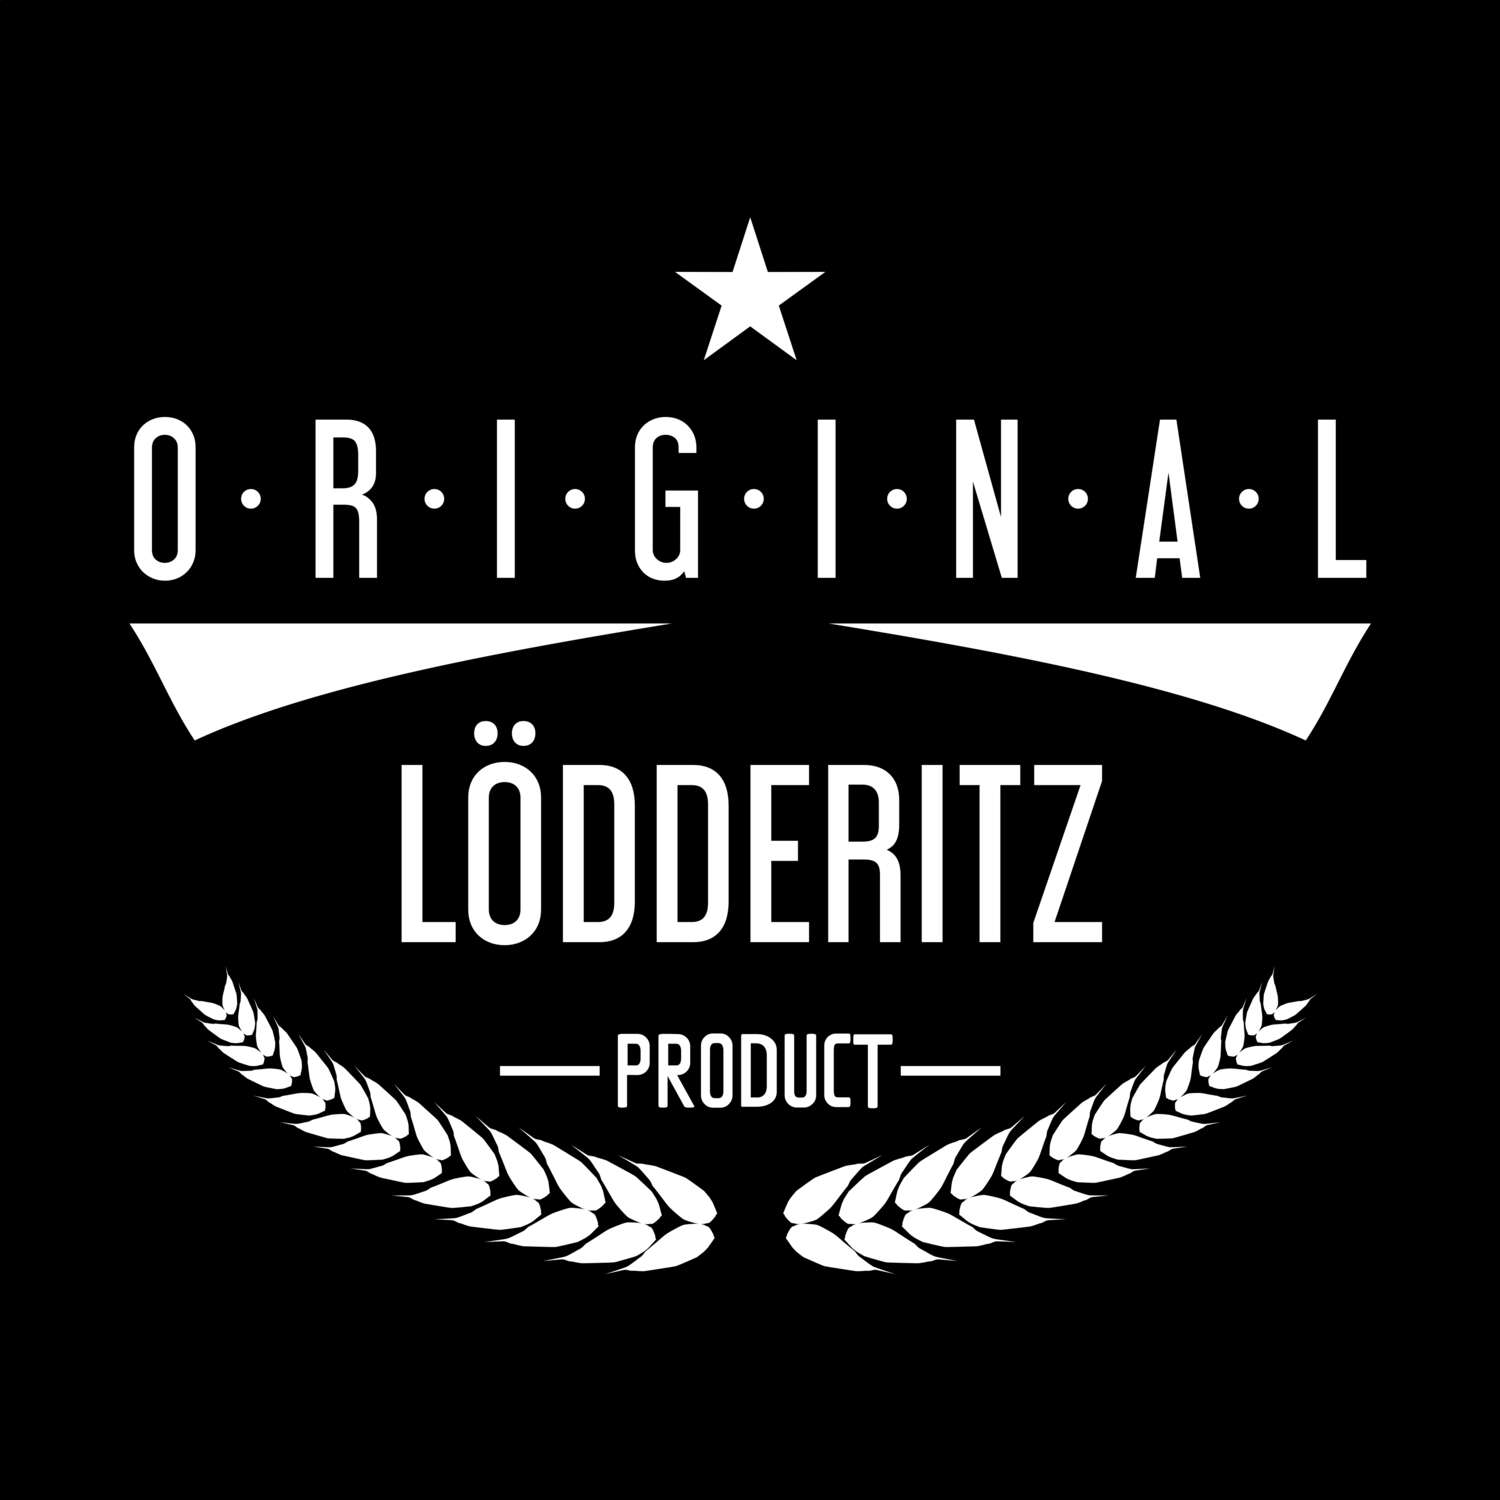 Lödderitz T-Shirt »Original Product«